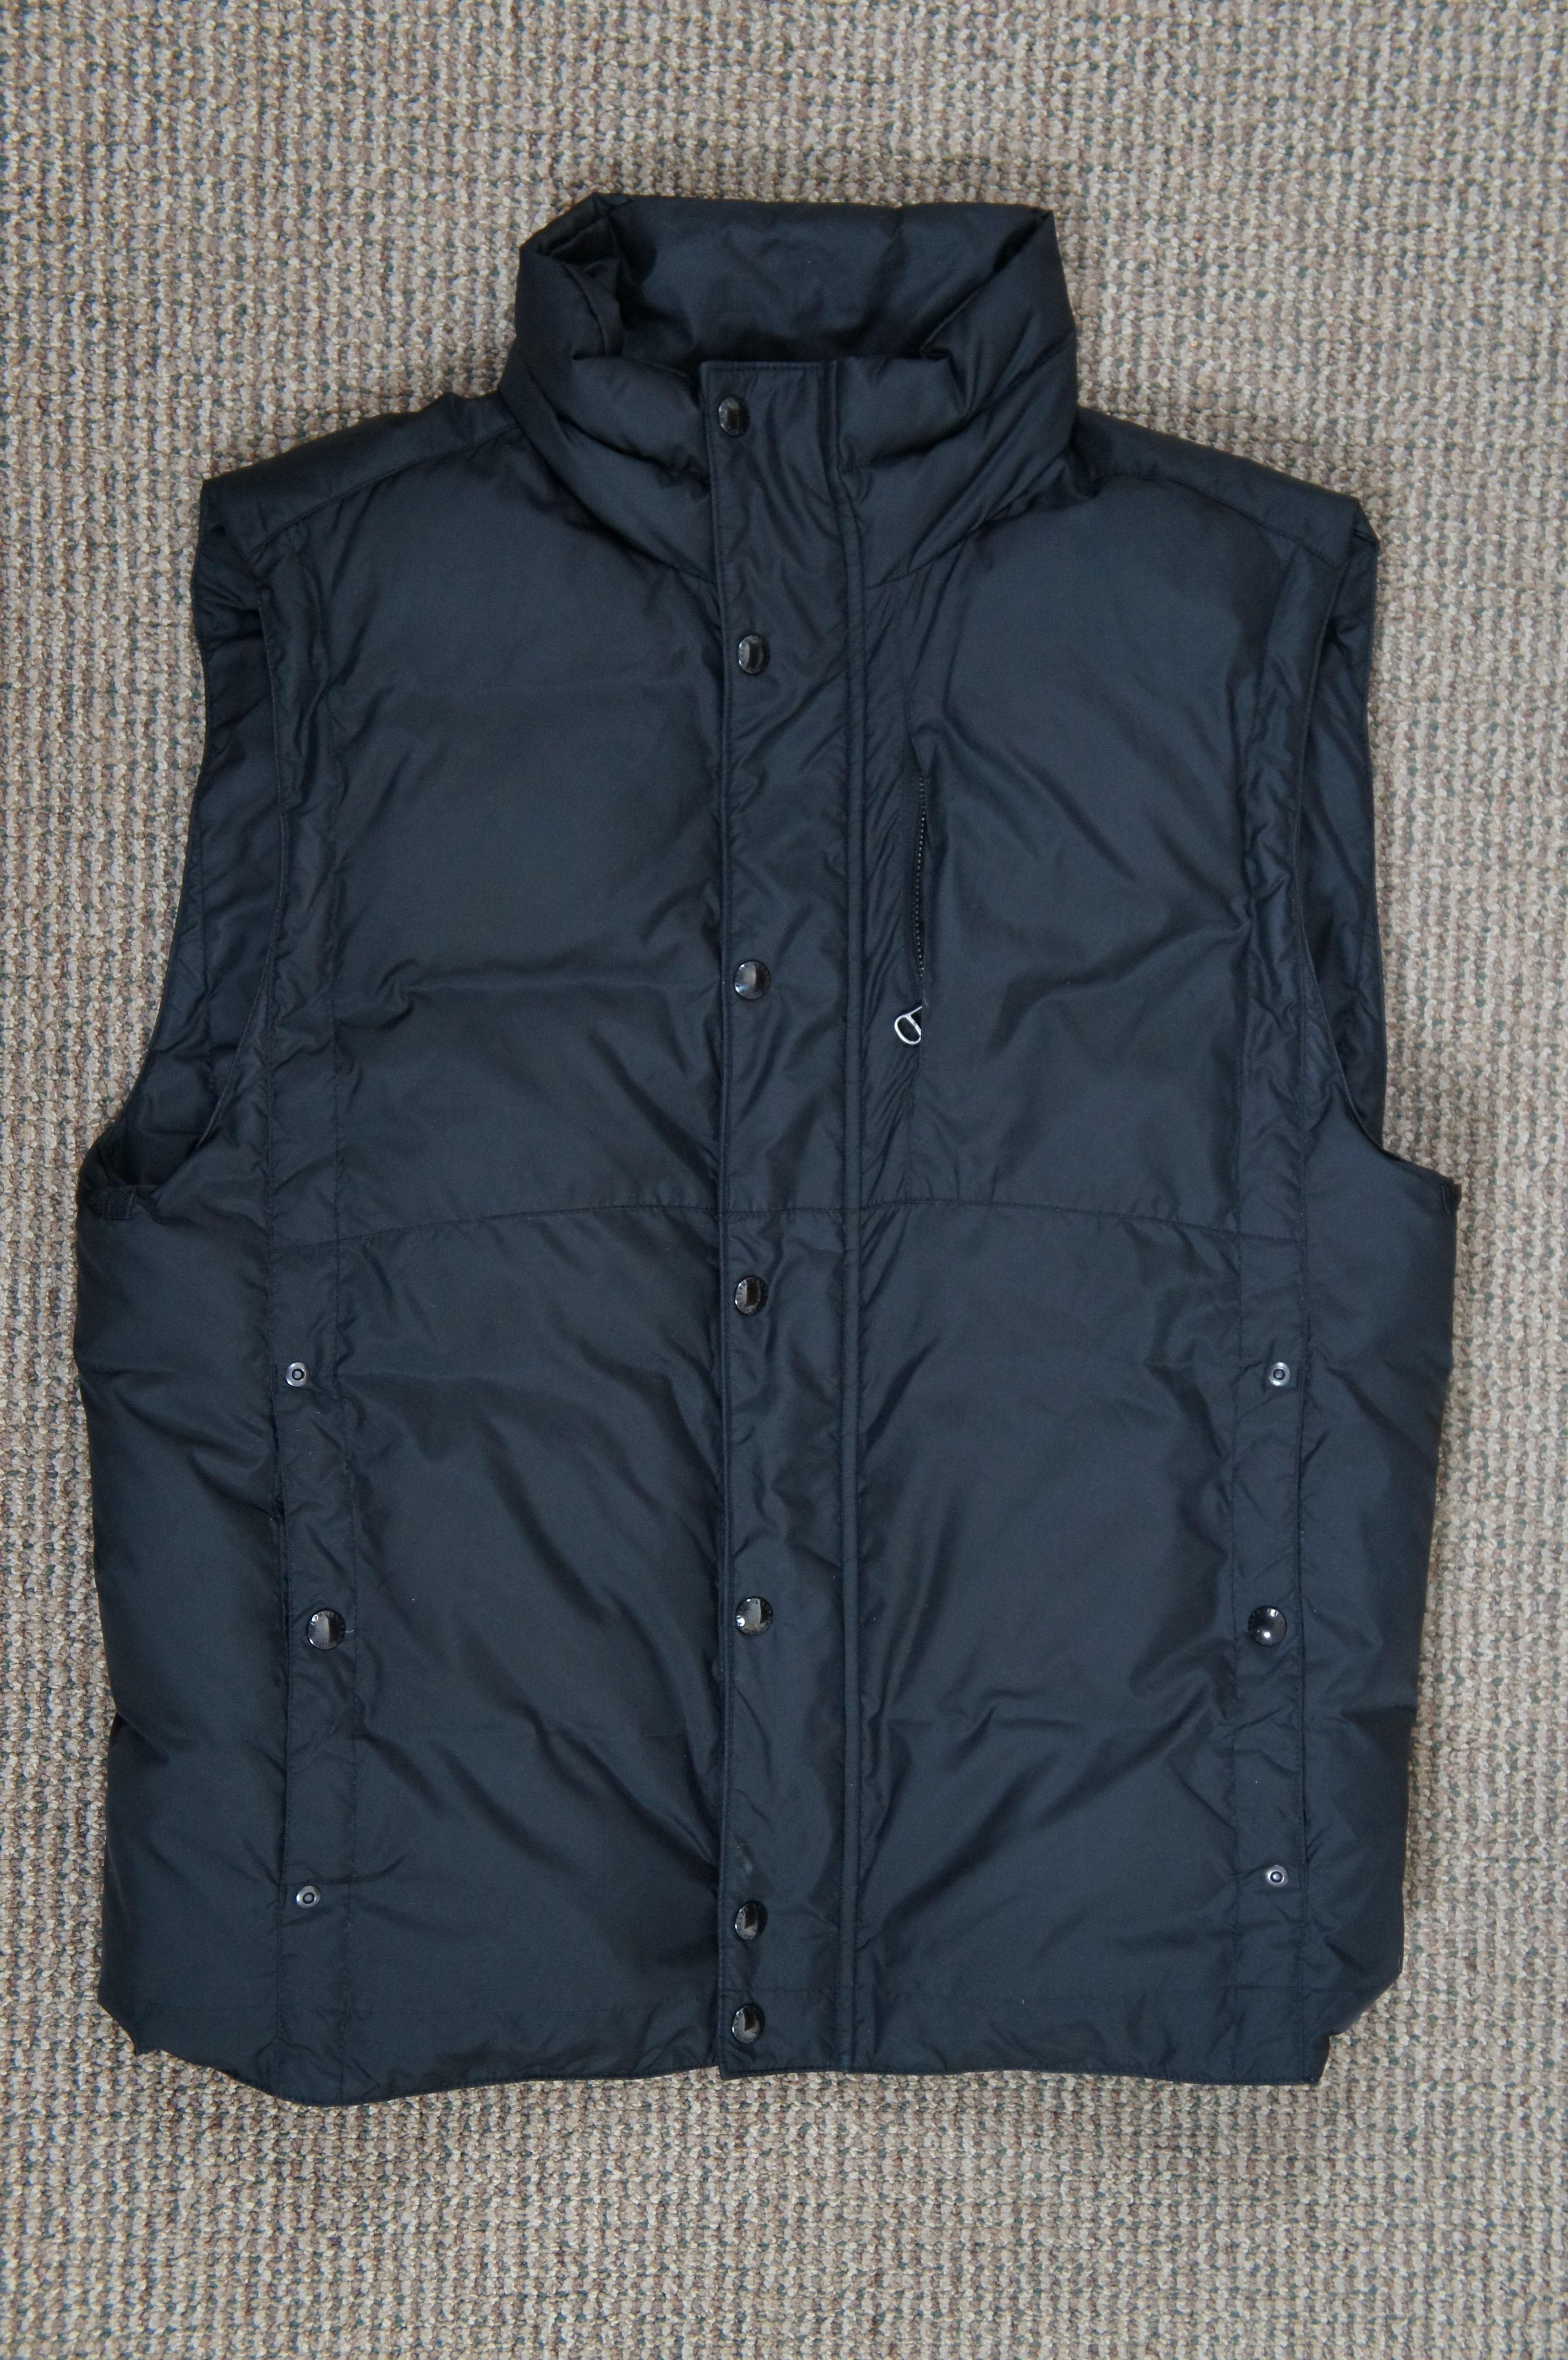 Vintage Polo Ralph Lauren Medium Black Winter Puffer Ski Jacket & Vest  In Good Condition For Sale In Dayton, OH